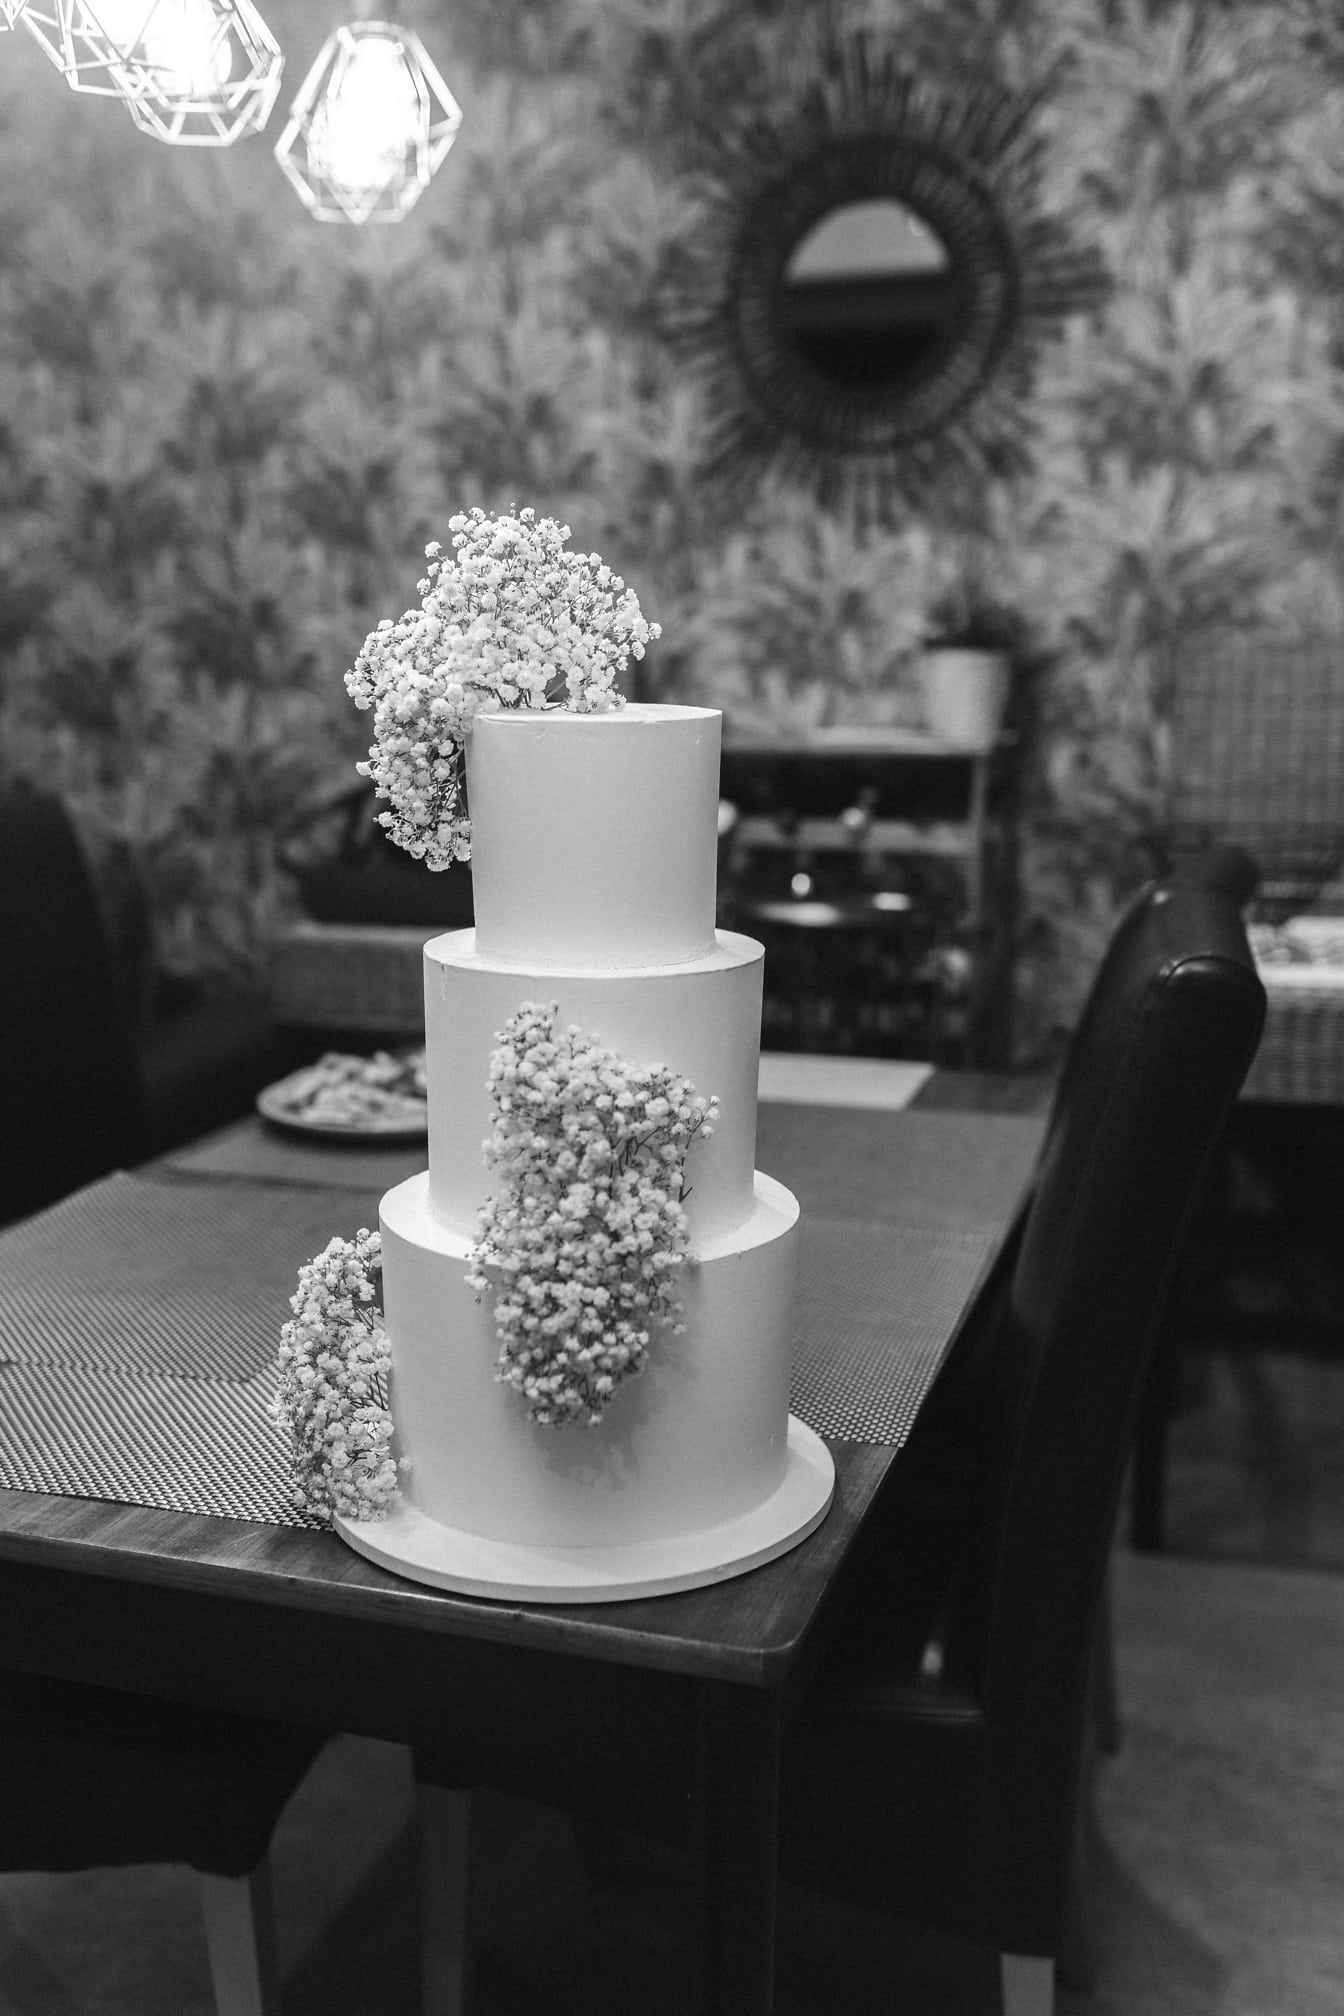 Monochrome photo of elegant wedding cake on restaurant table